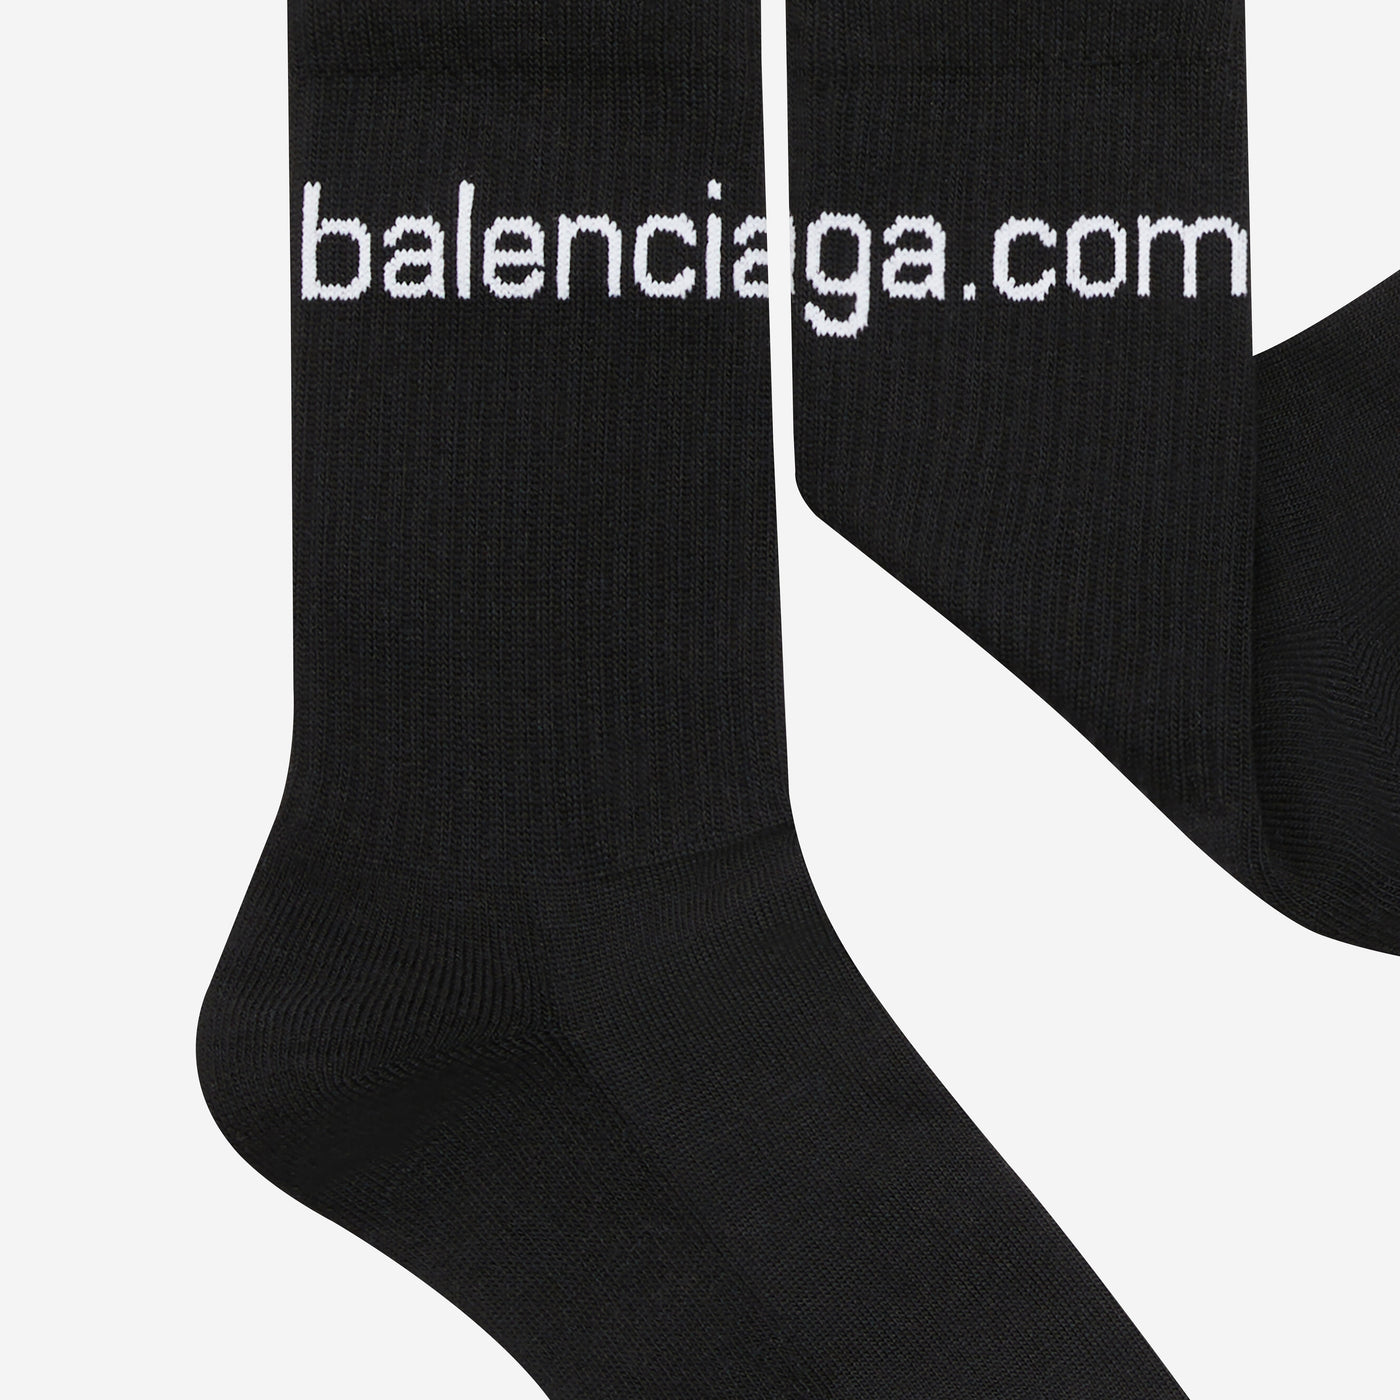 Balenciaga Bal.com Socks